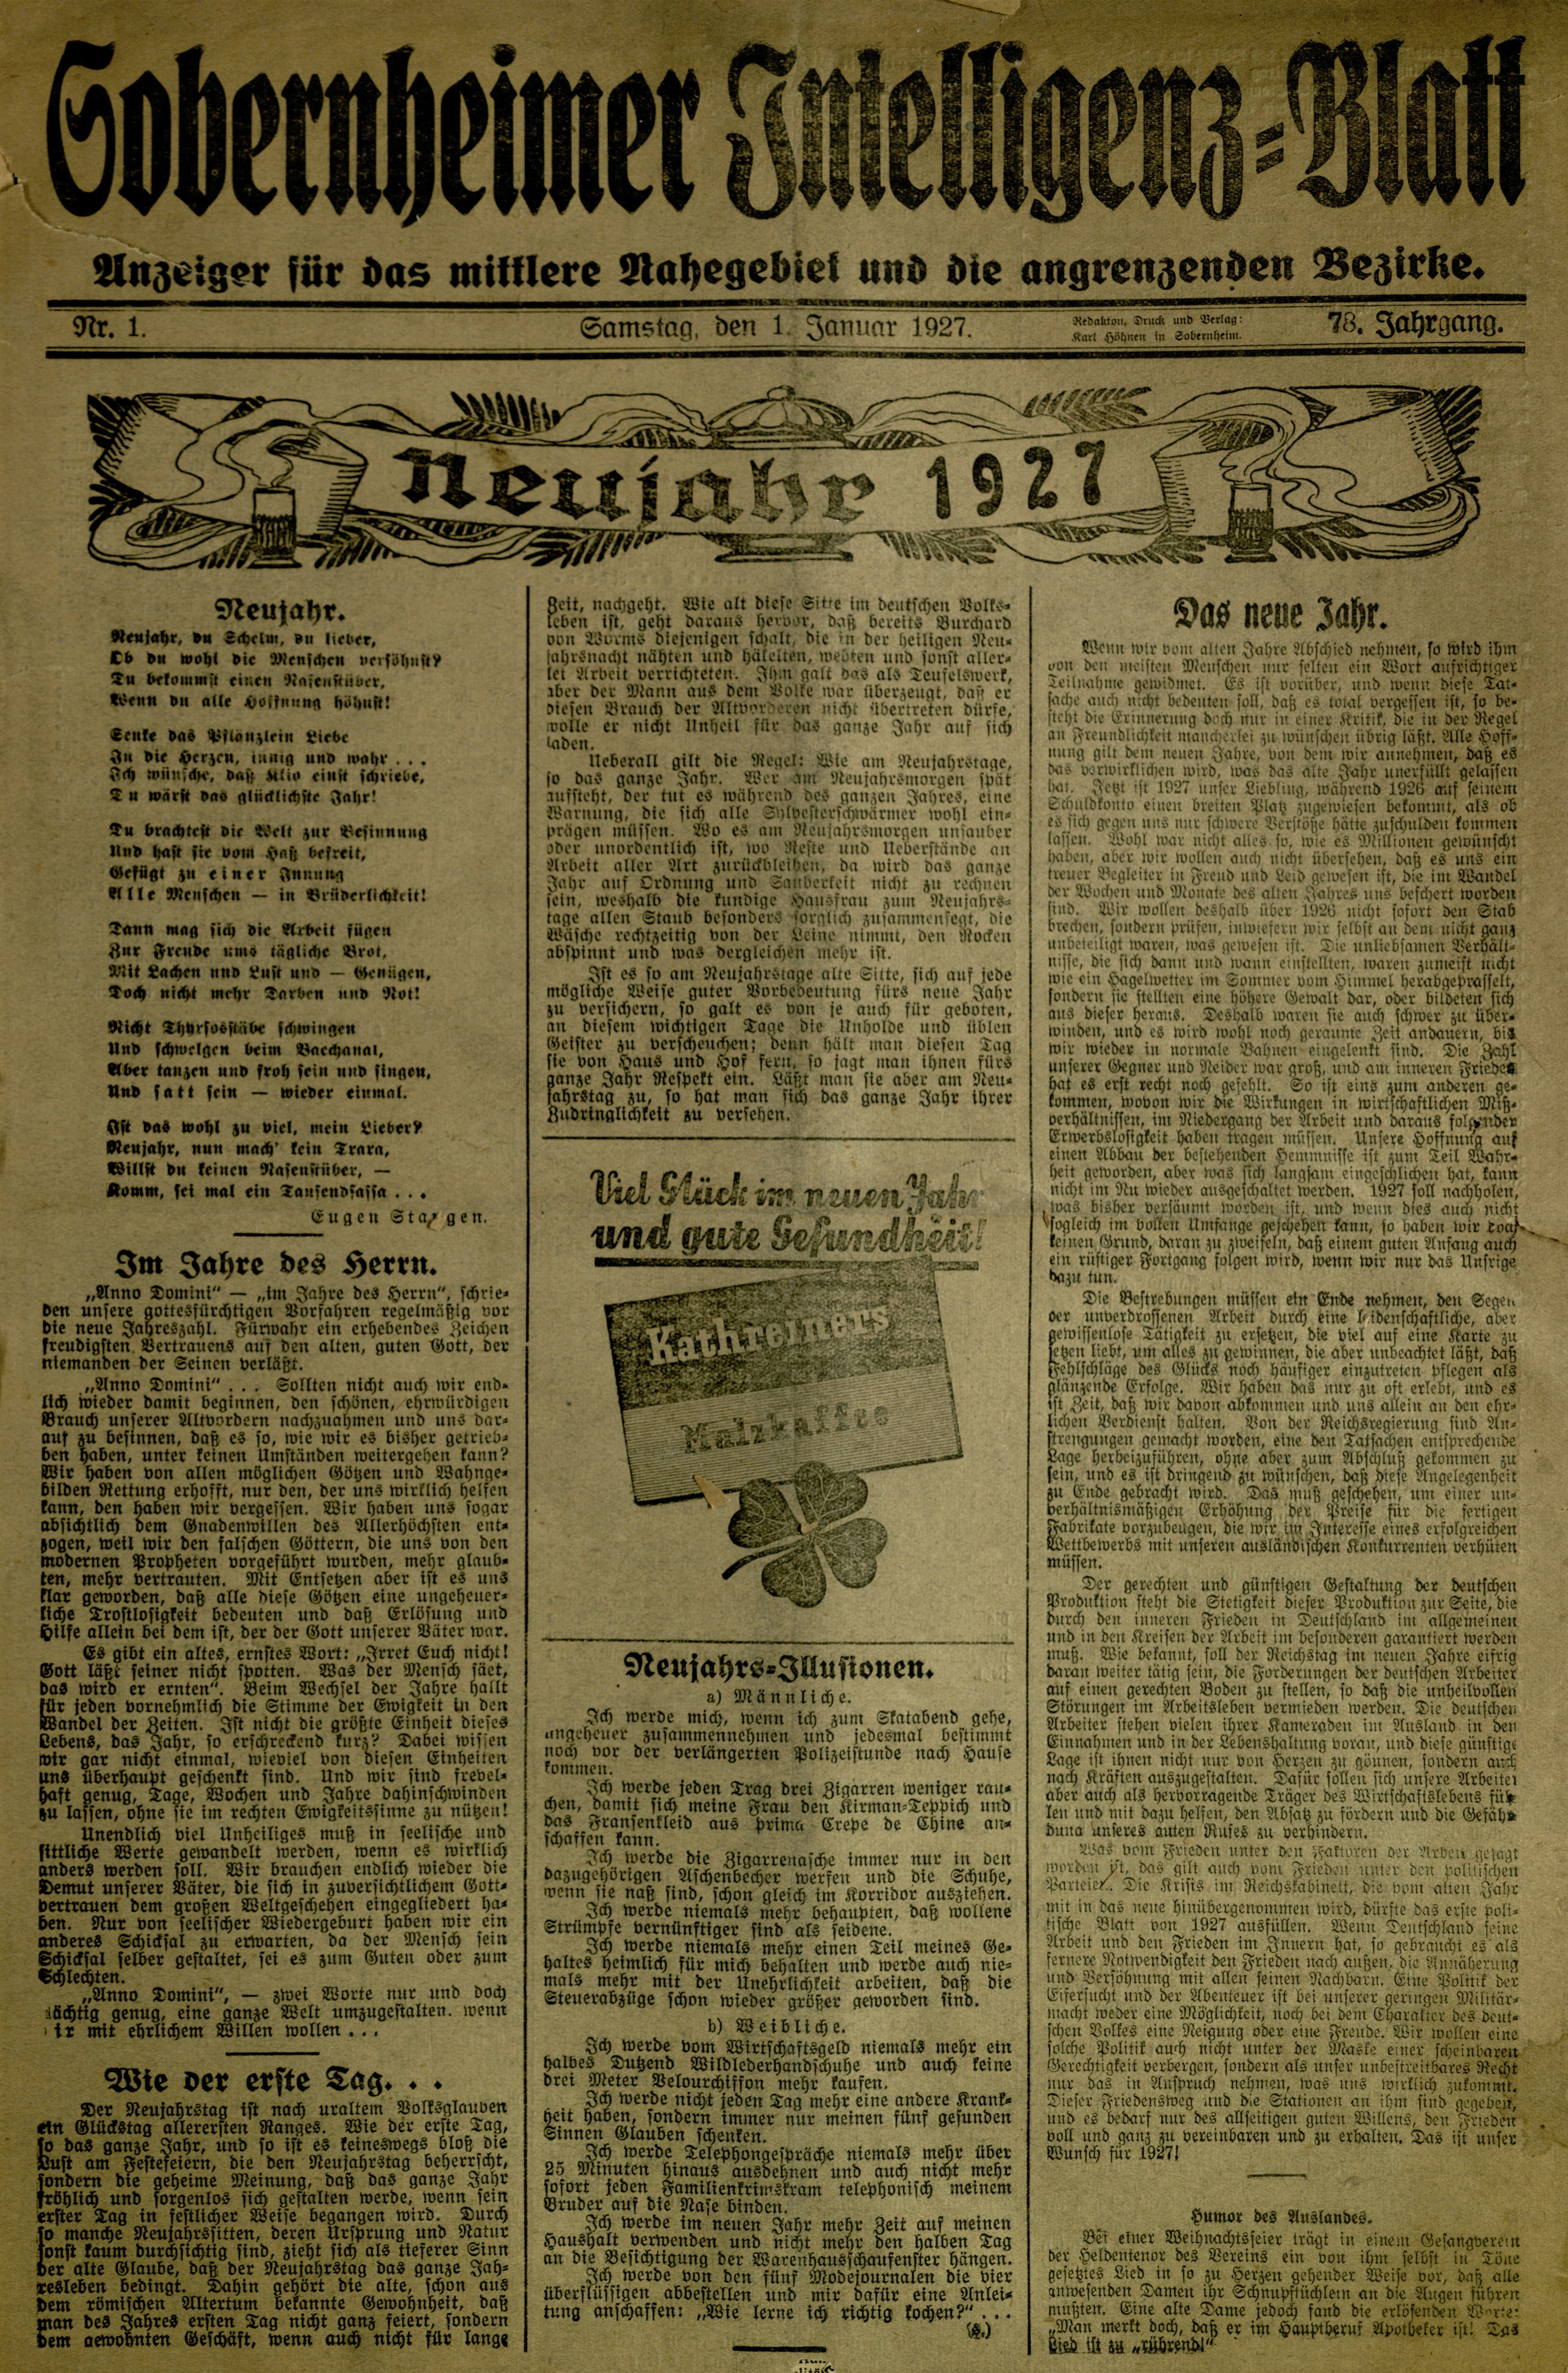 Zeitung: Sobernheimer Intelligenzblatt; Januar 1927, Jg. 78 Nr. 1 (Heimatmuseum Bad Sobernheim CC BY-NC-SA)